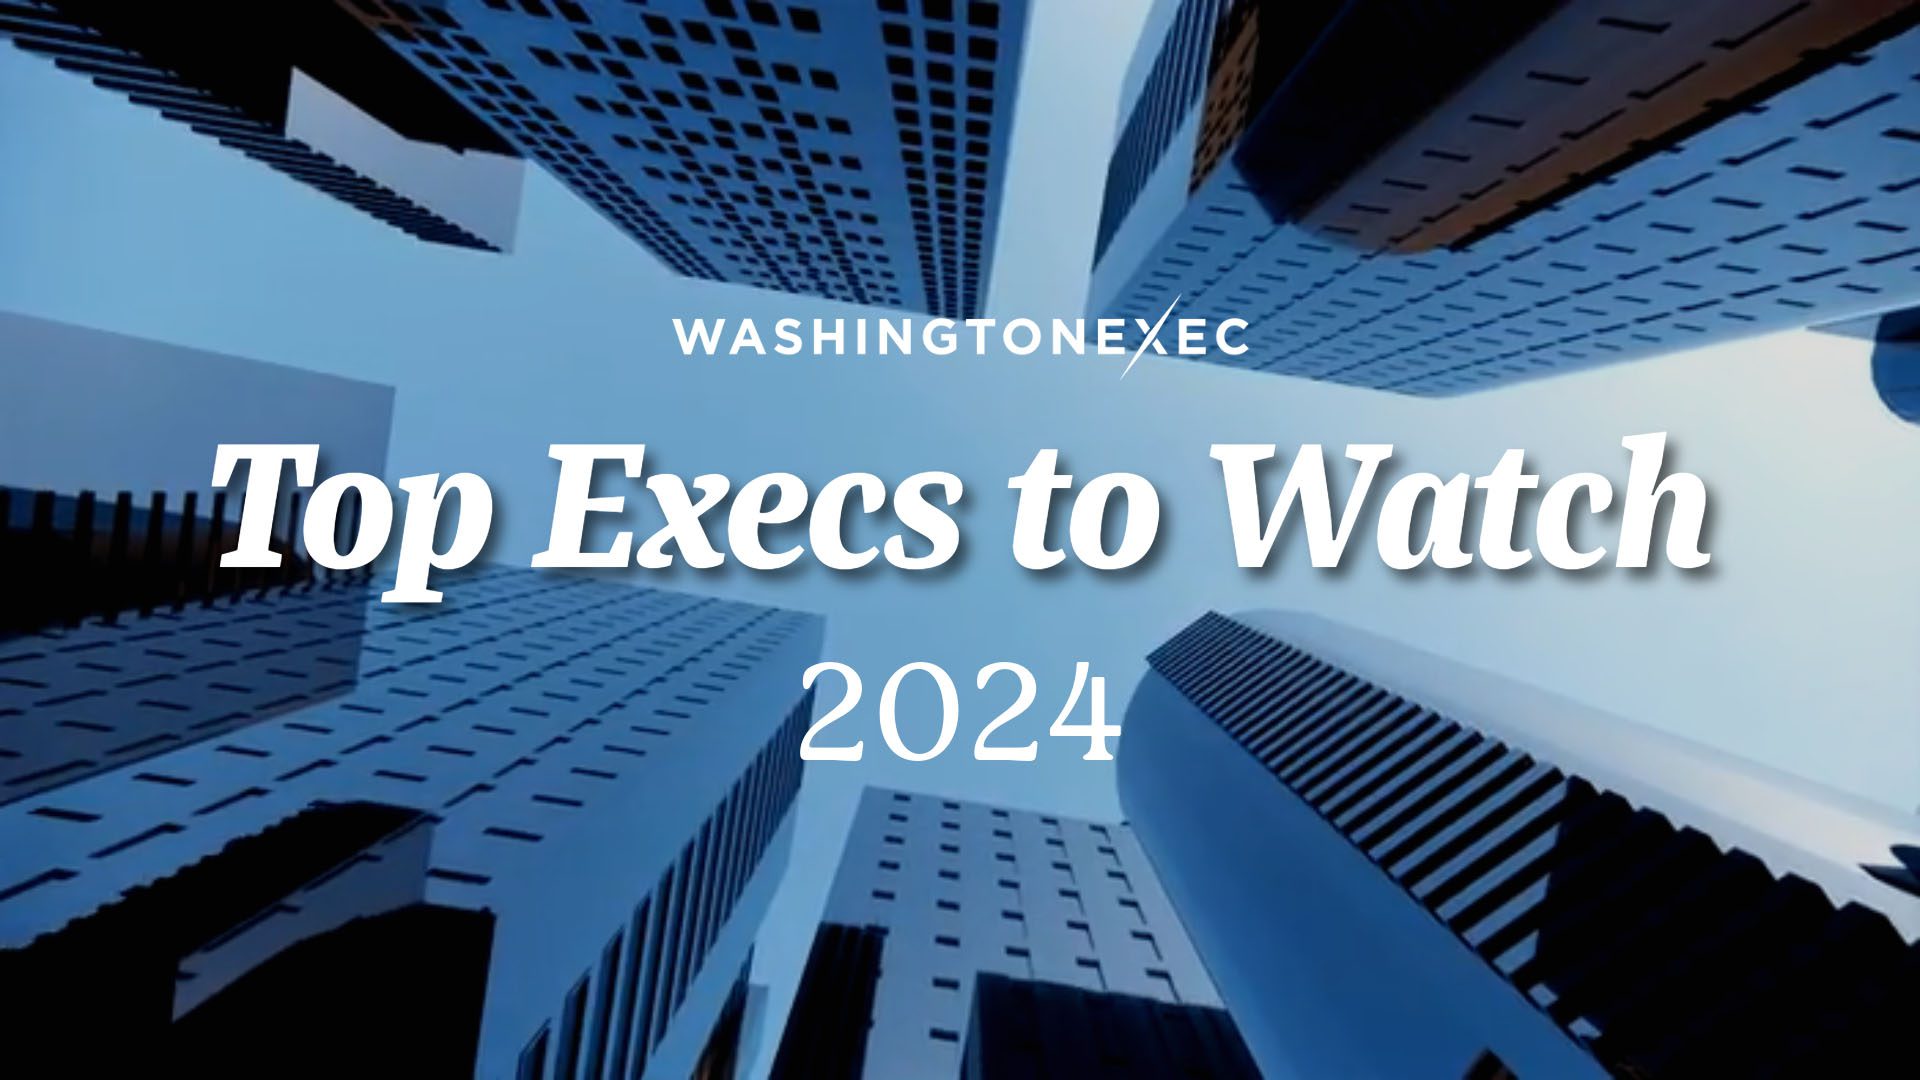 Top Execs to Watch in 2024